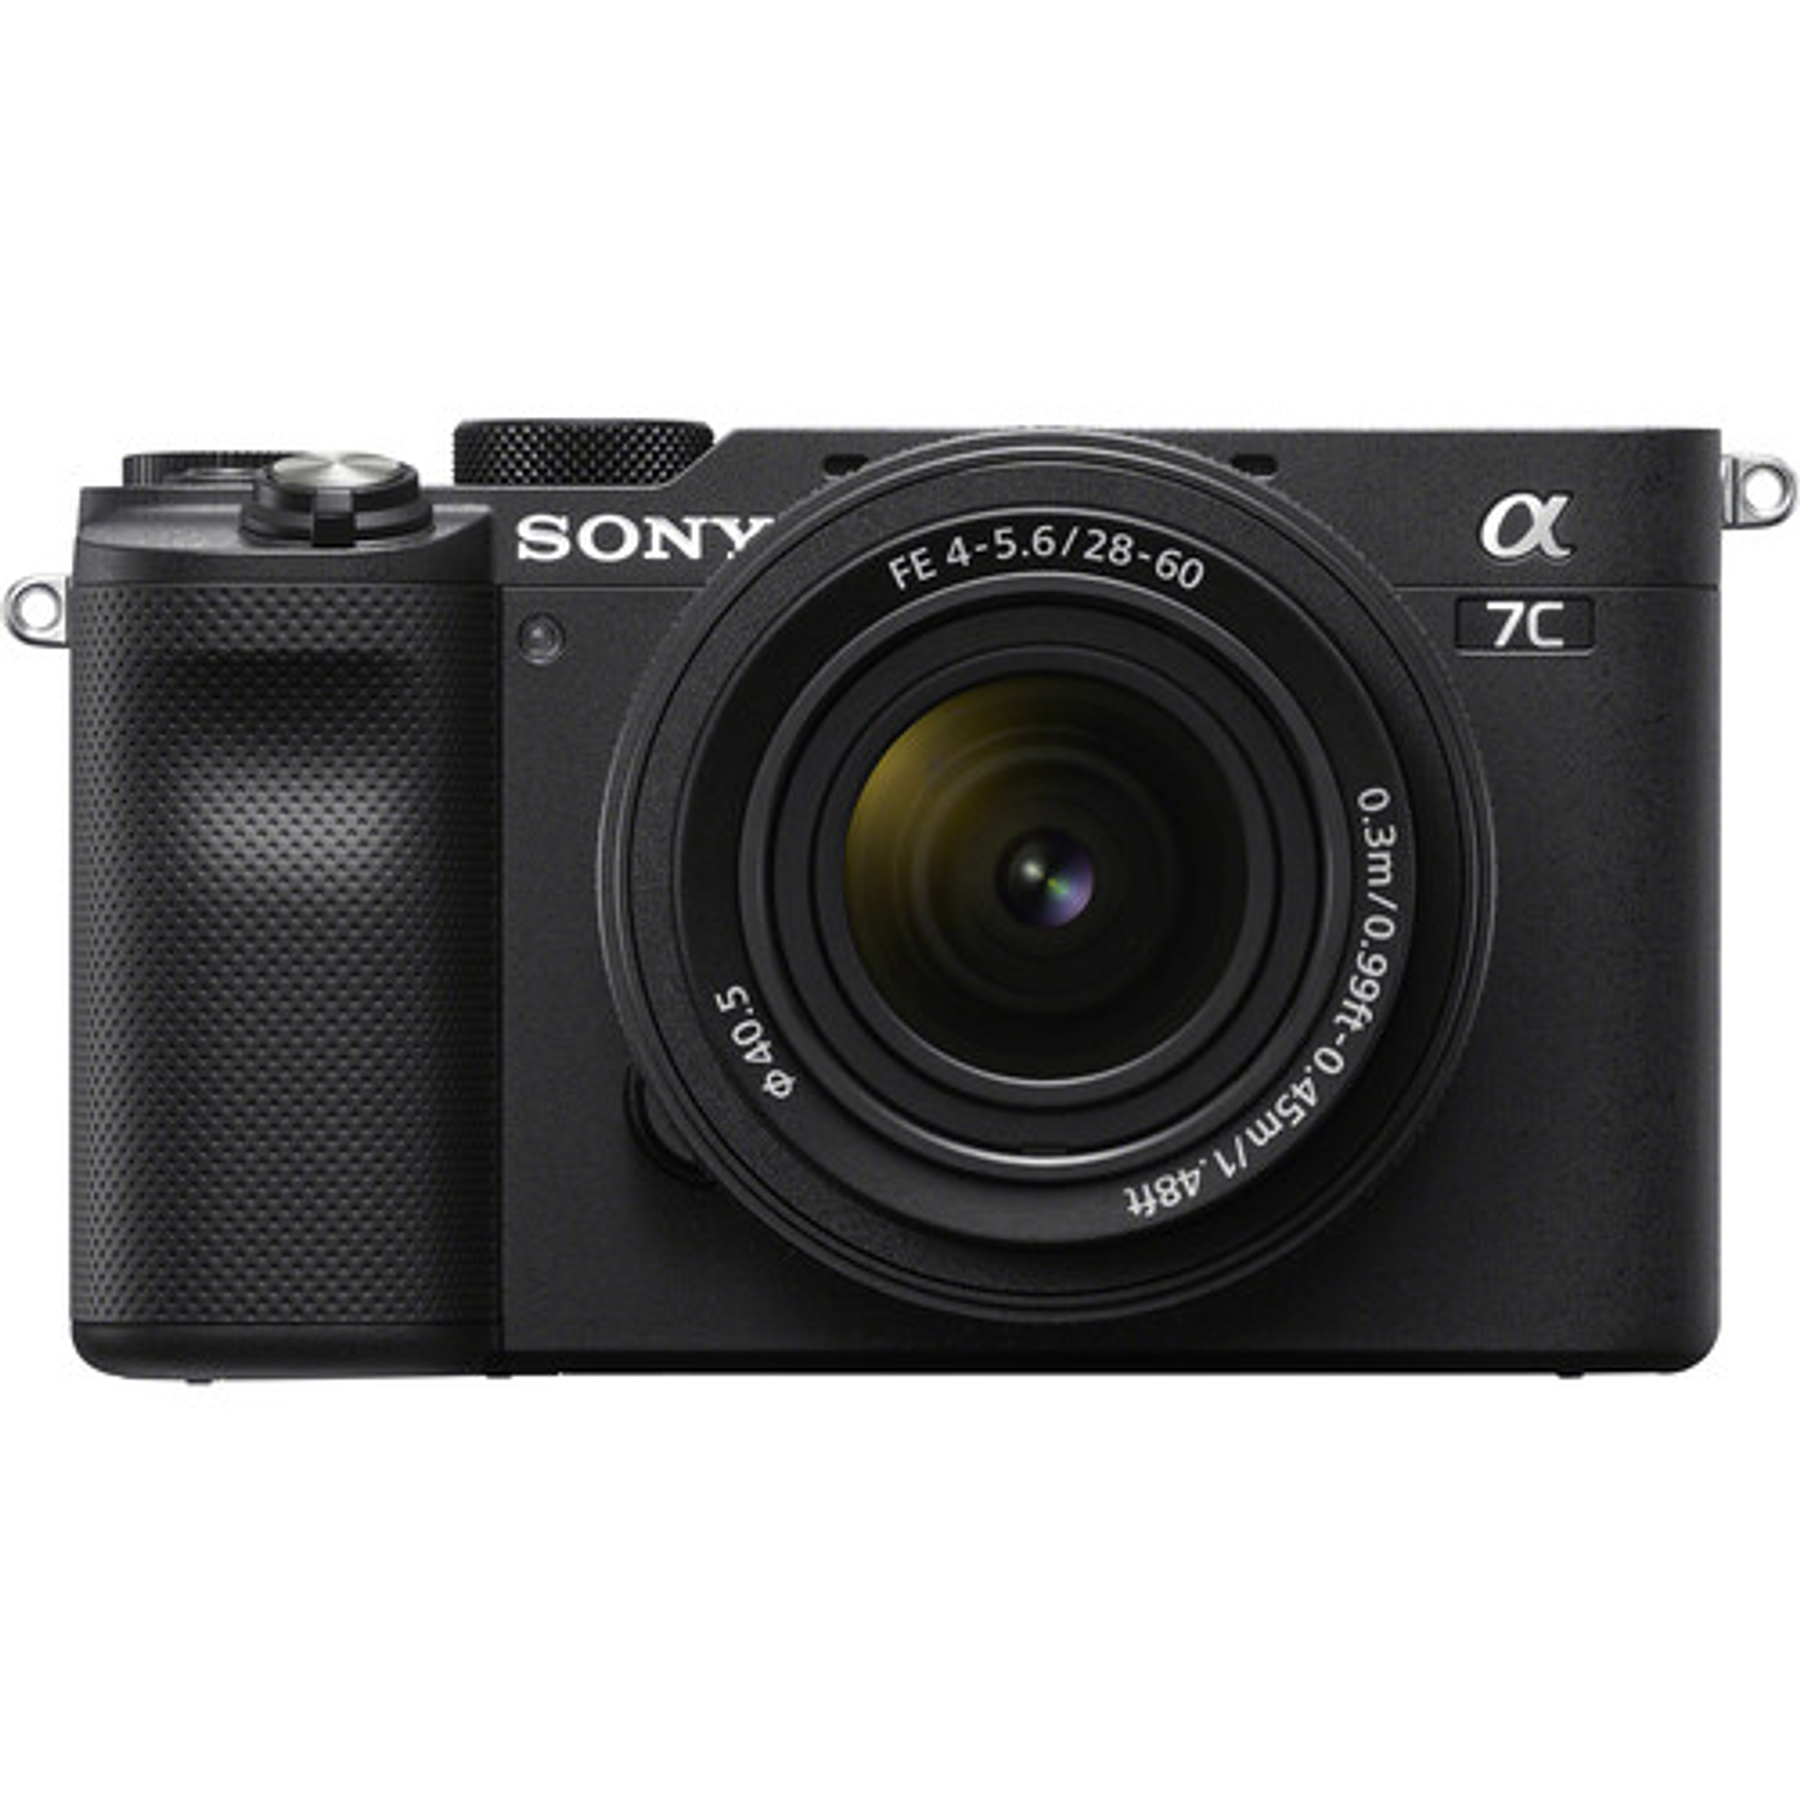 Sony a7c + FE 28-60mm f/4-5.6 